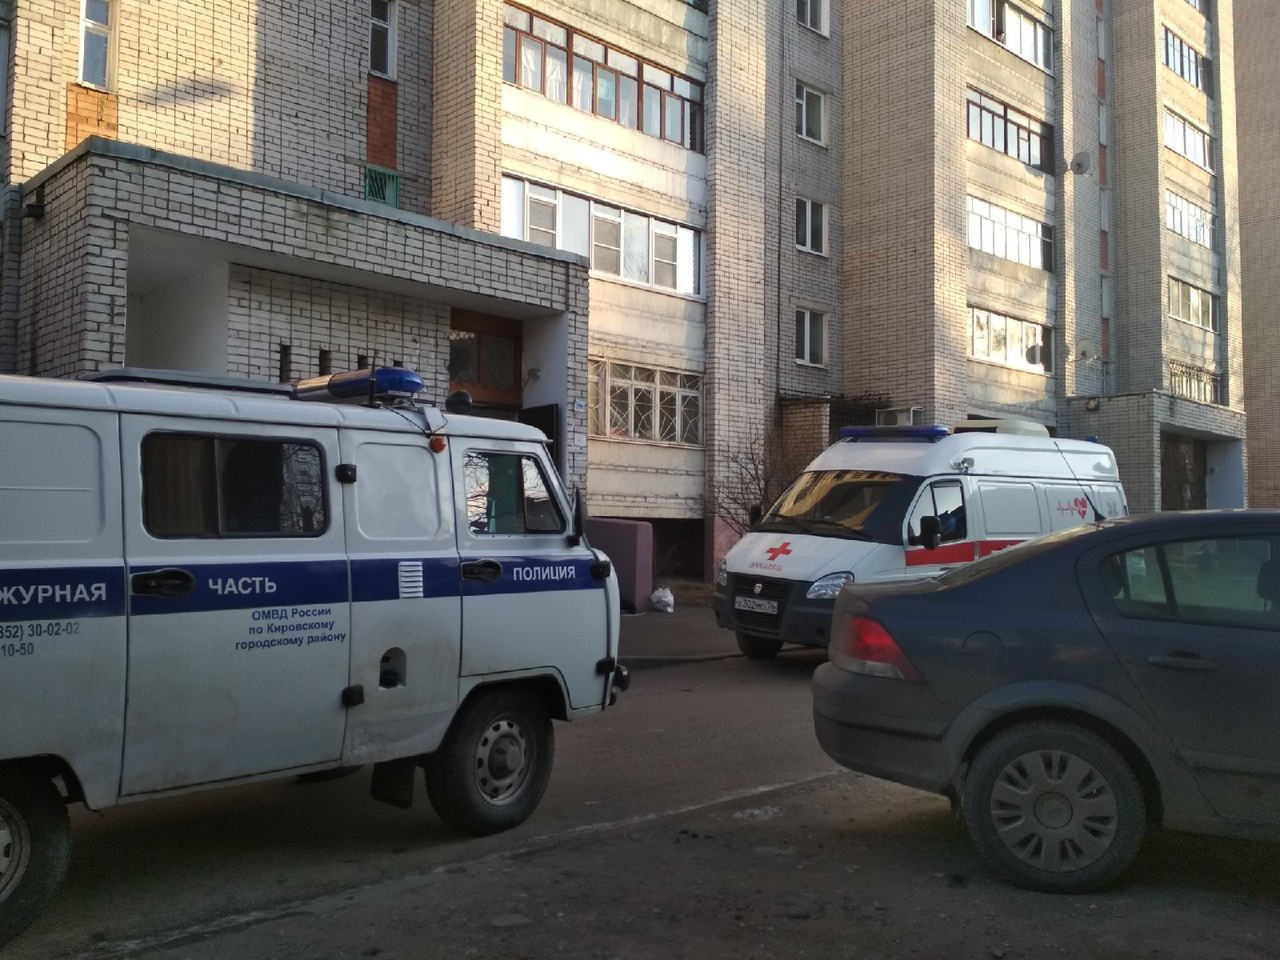 Проткнул сердце на глазах у друзей: иностранец напал на молодого парня в Ярославле